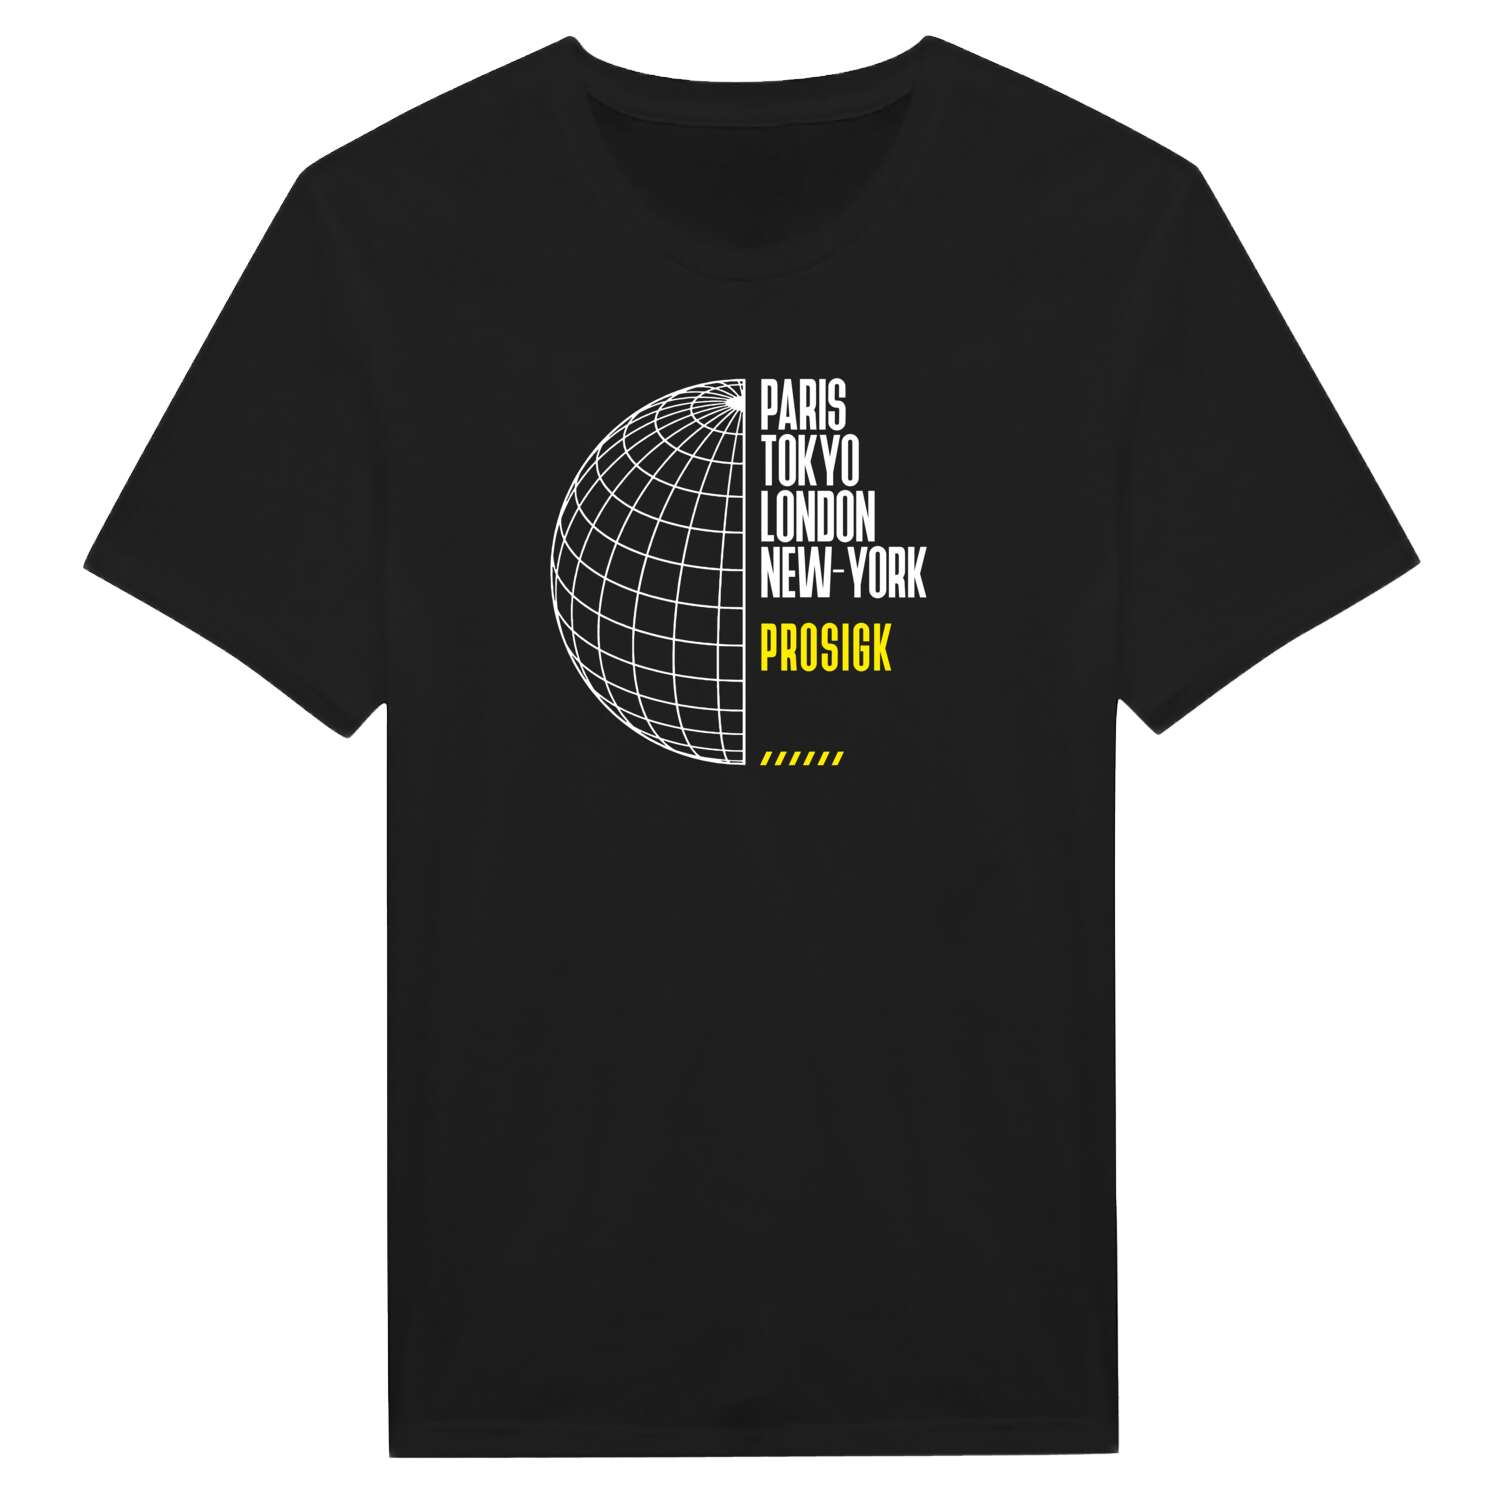 Prosigk T-Shirt »Paris Tokyo London«